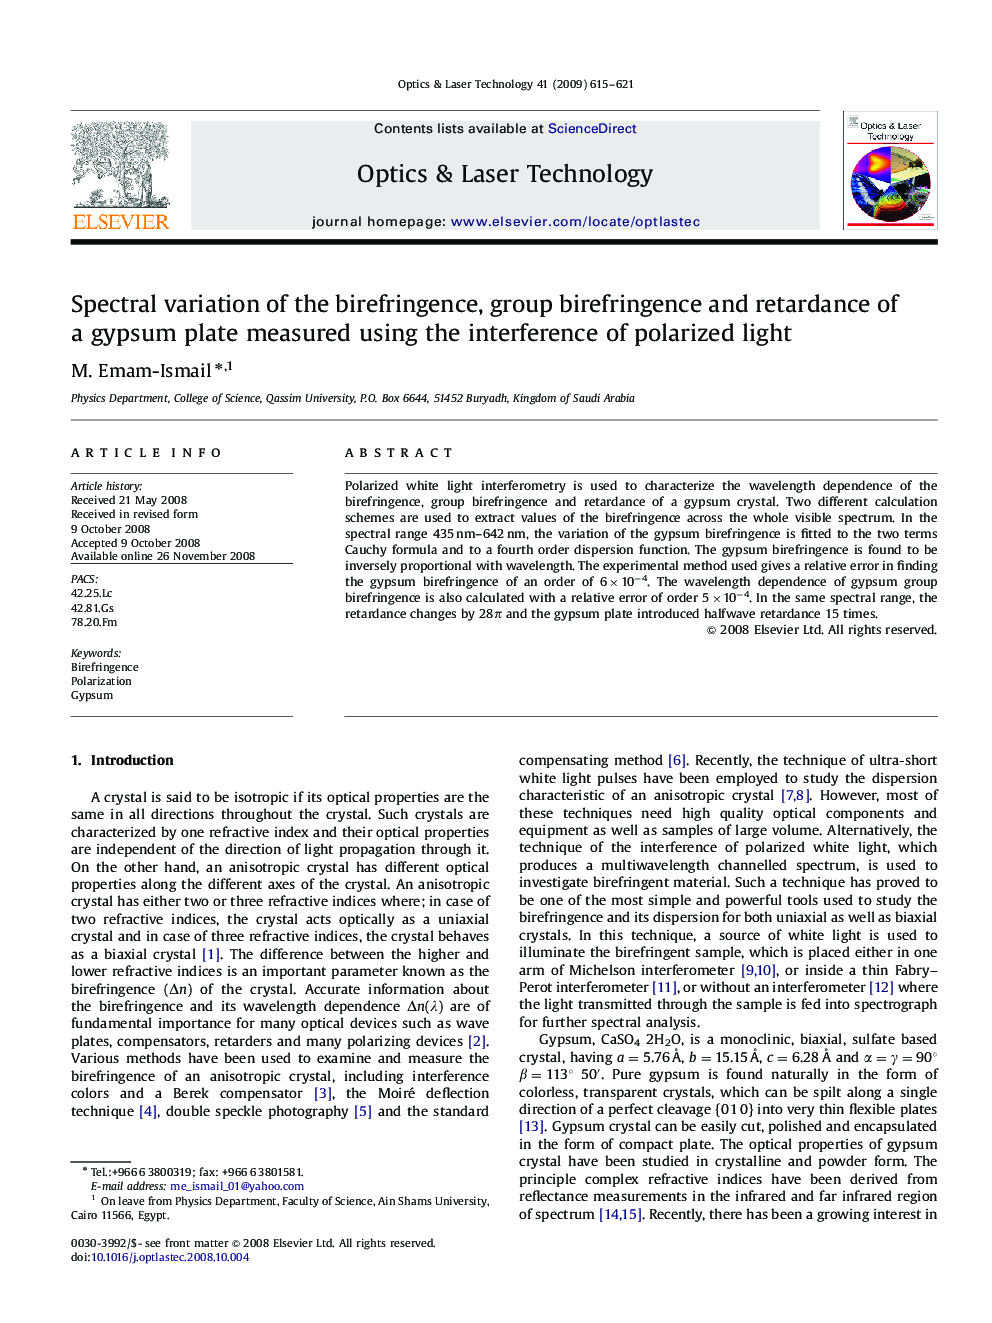 Spectral variation of the birefringence, group birefringence and retardance of a gypsum plate measured using the interference of polarized light